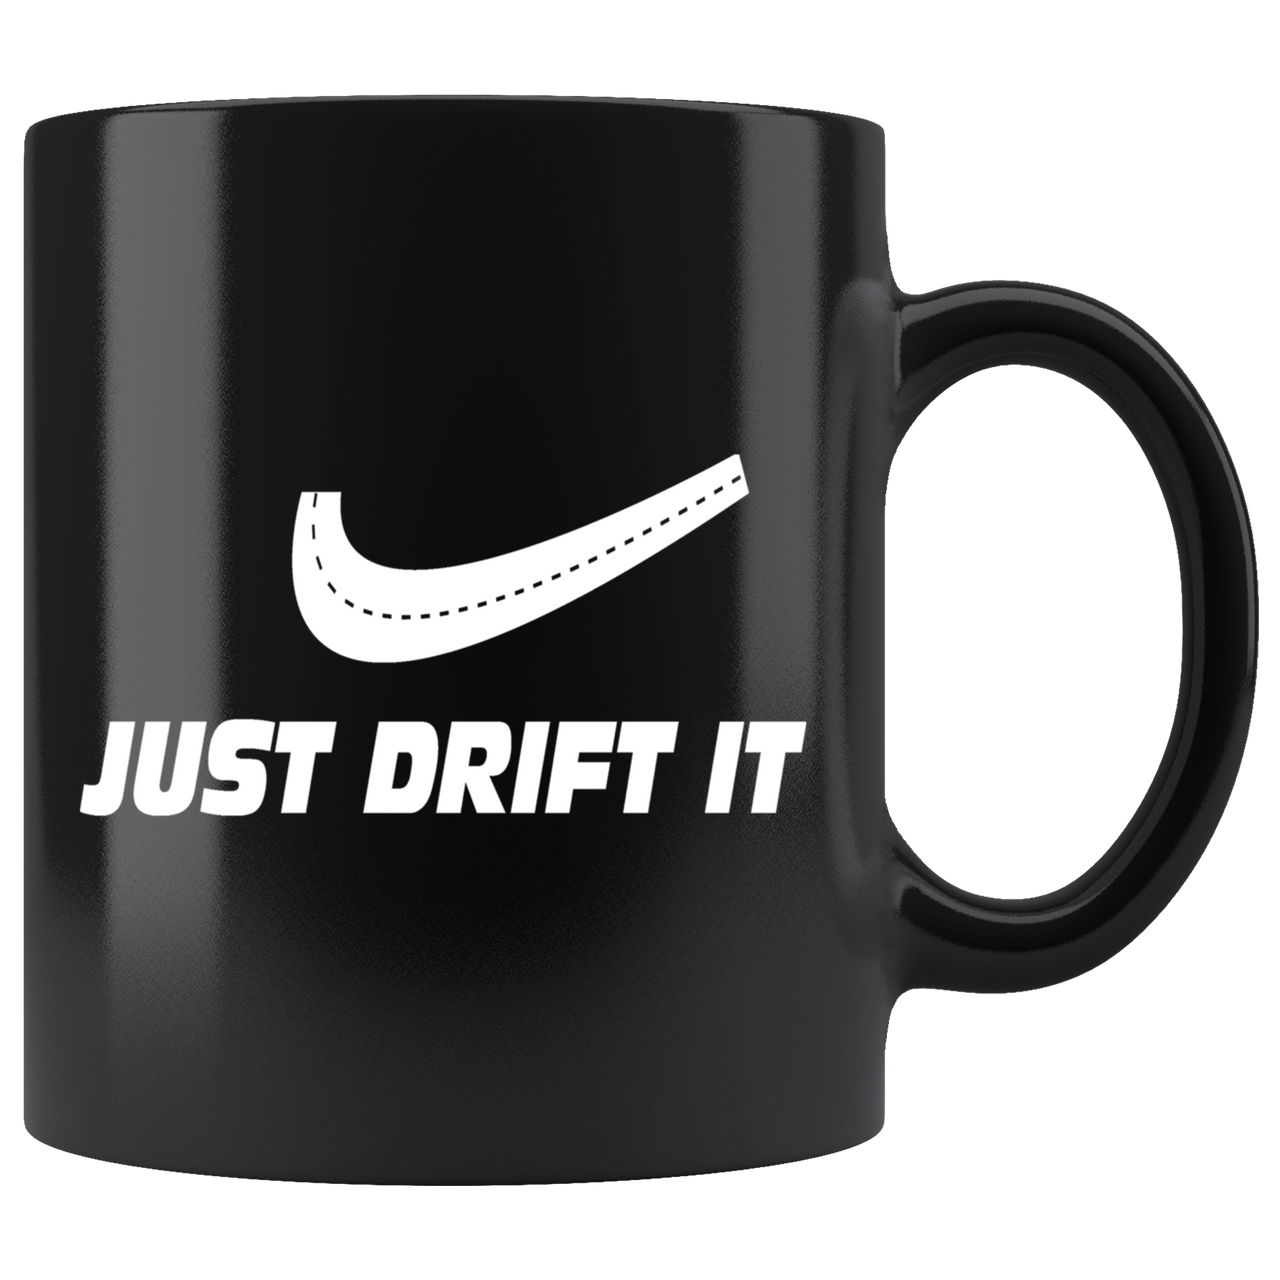 Just Drift It Mug!